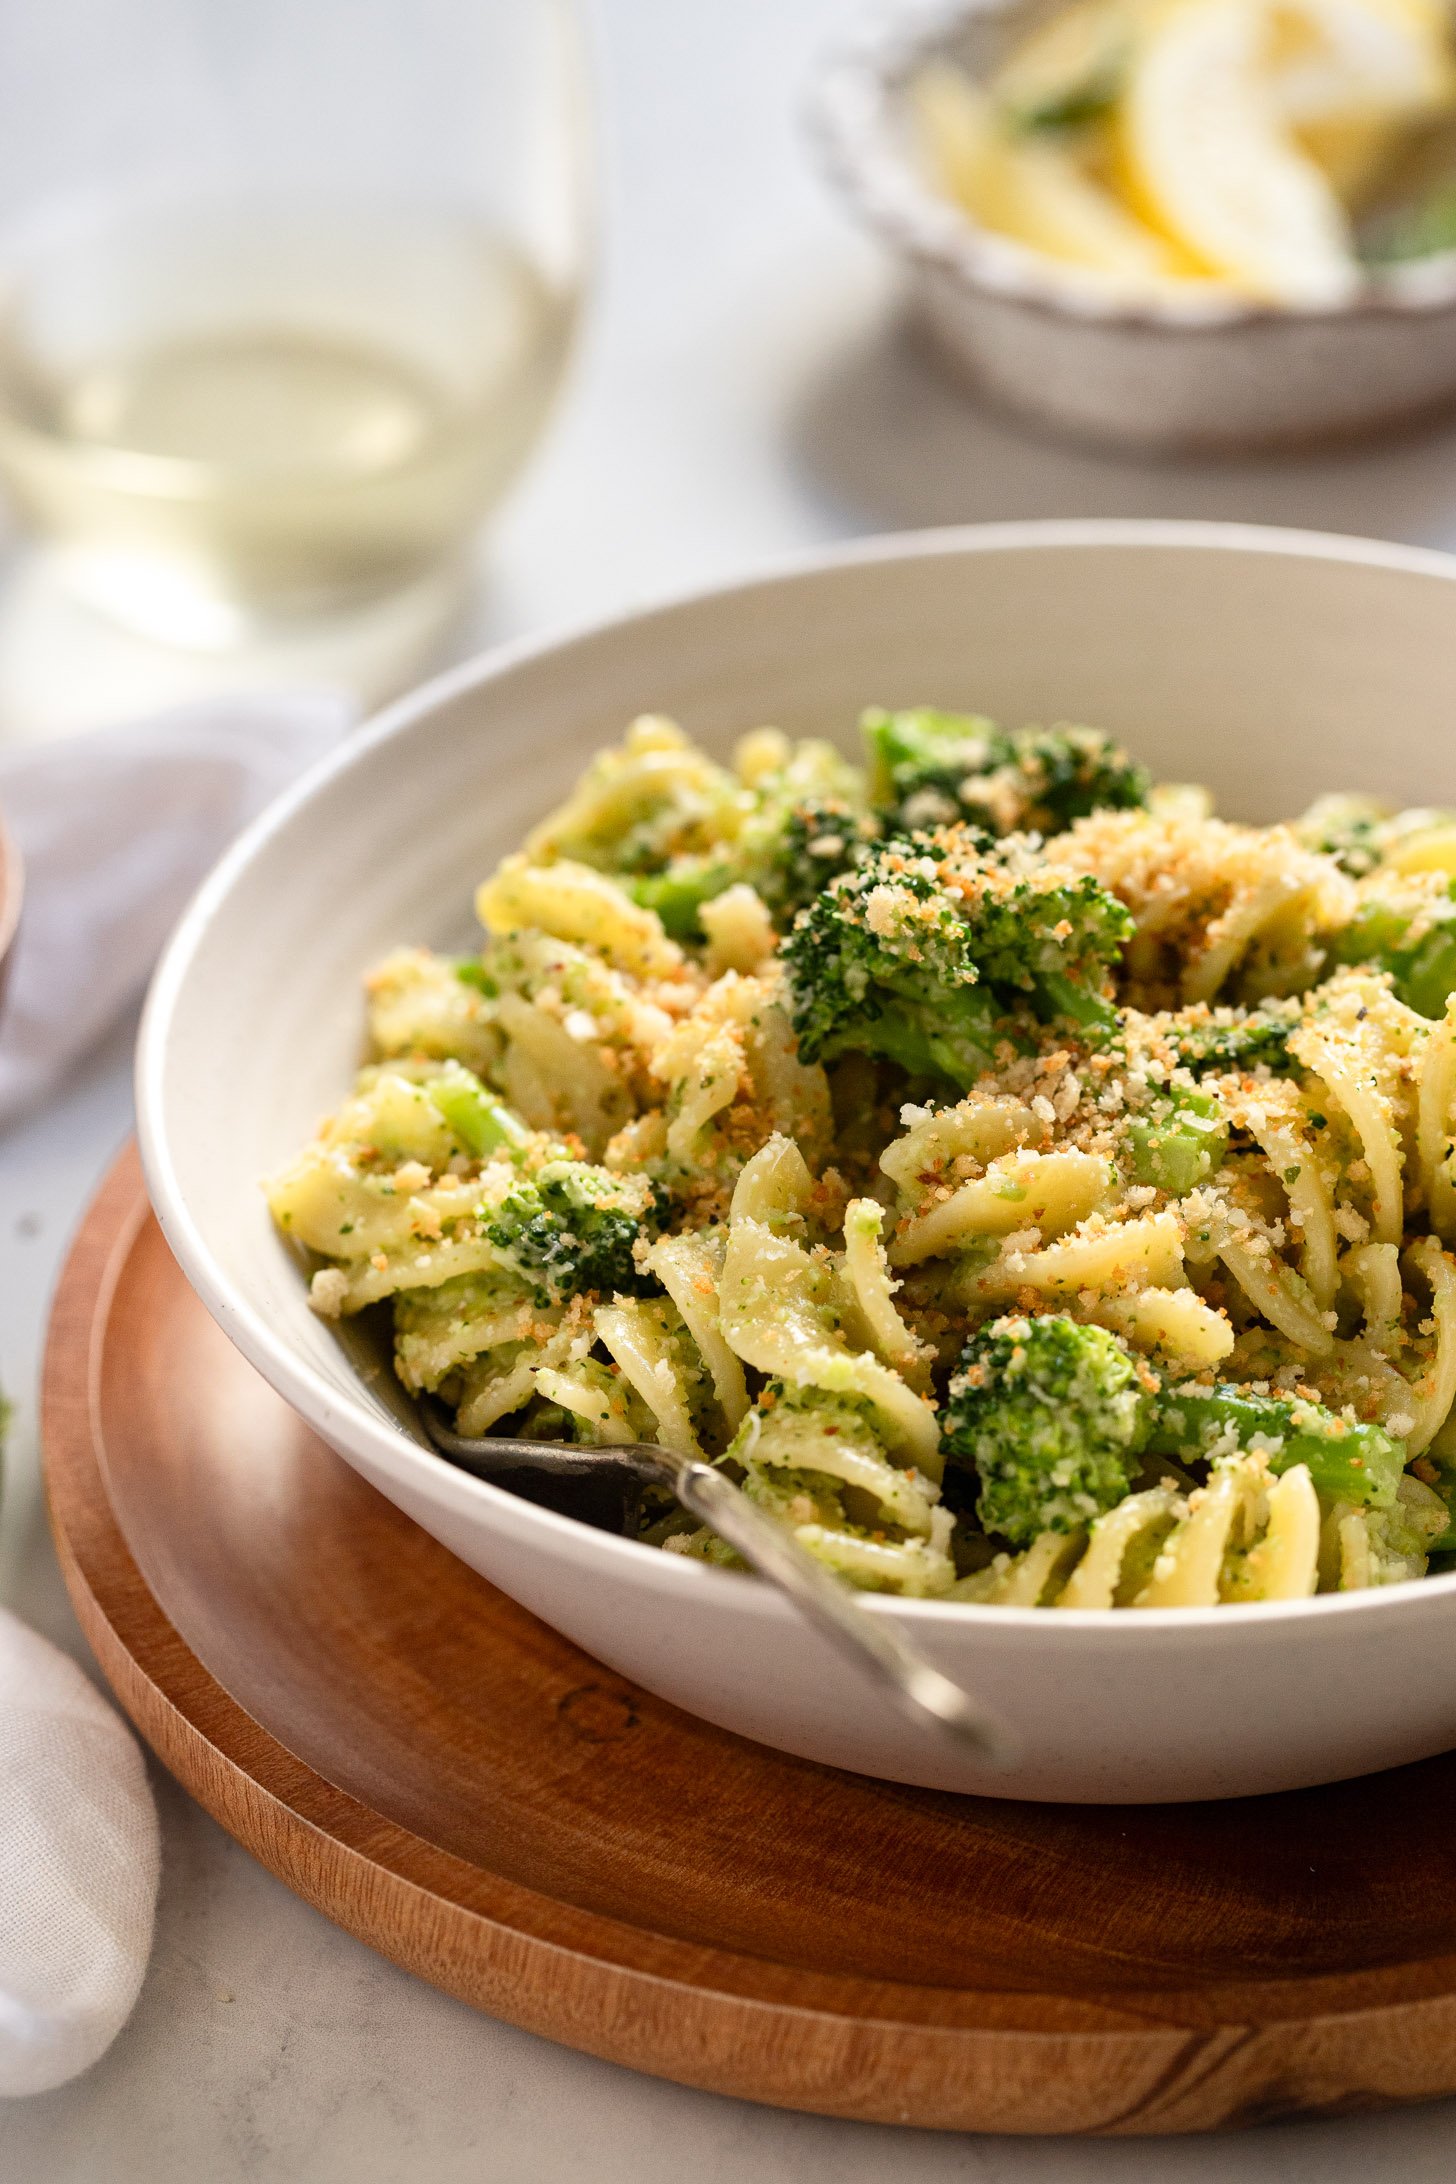 Broccoli pesto pasta side view in bowl.